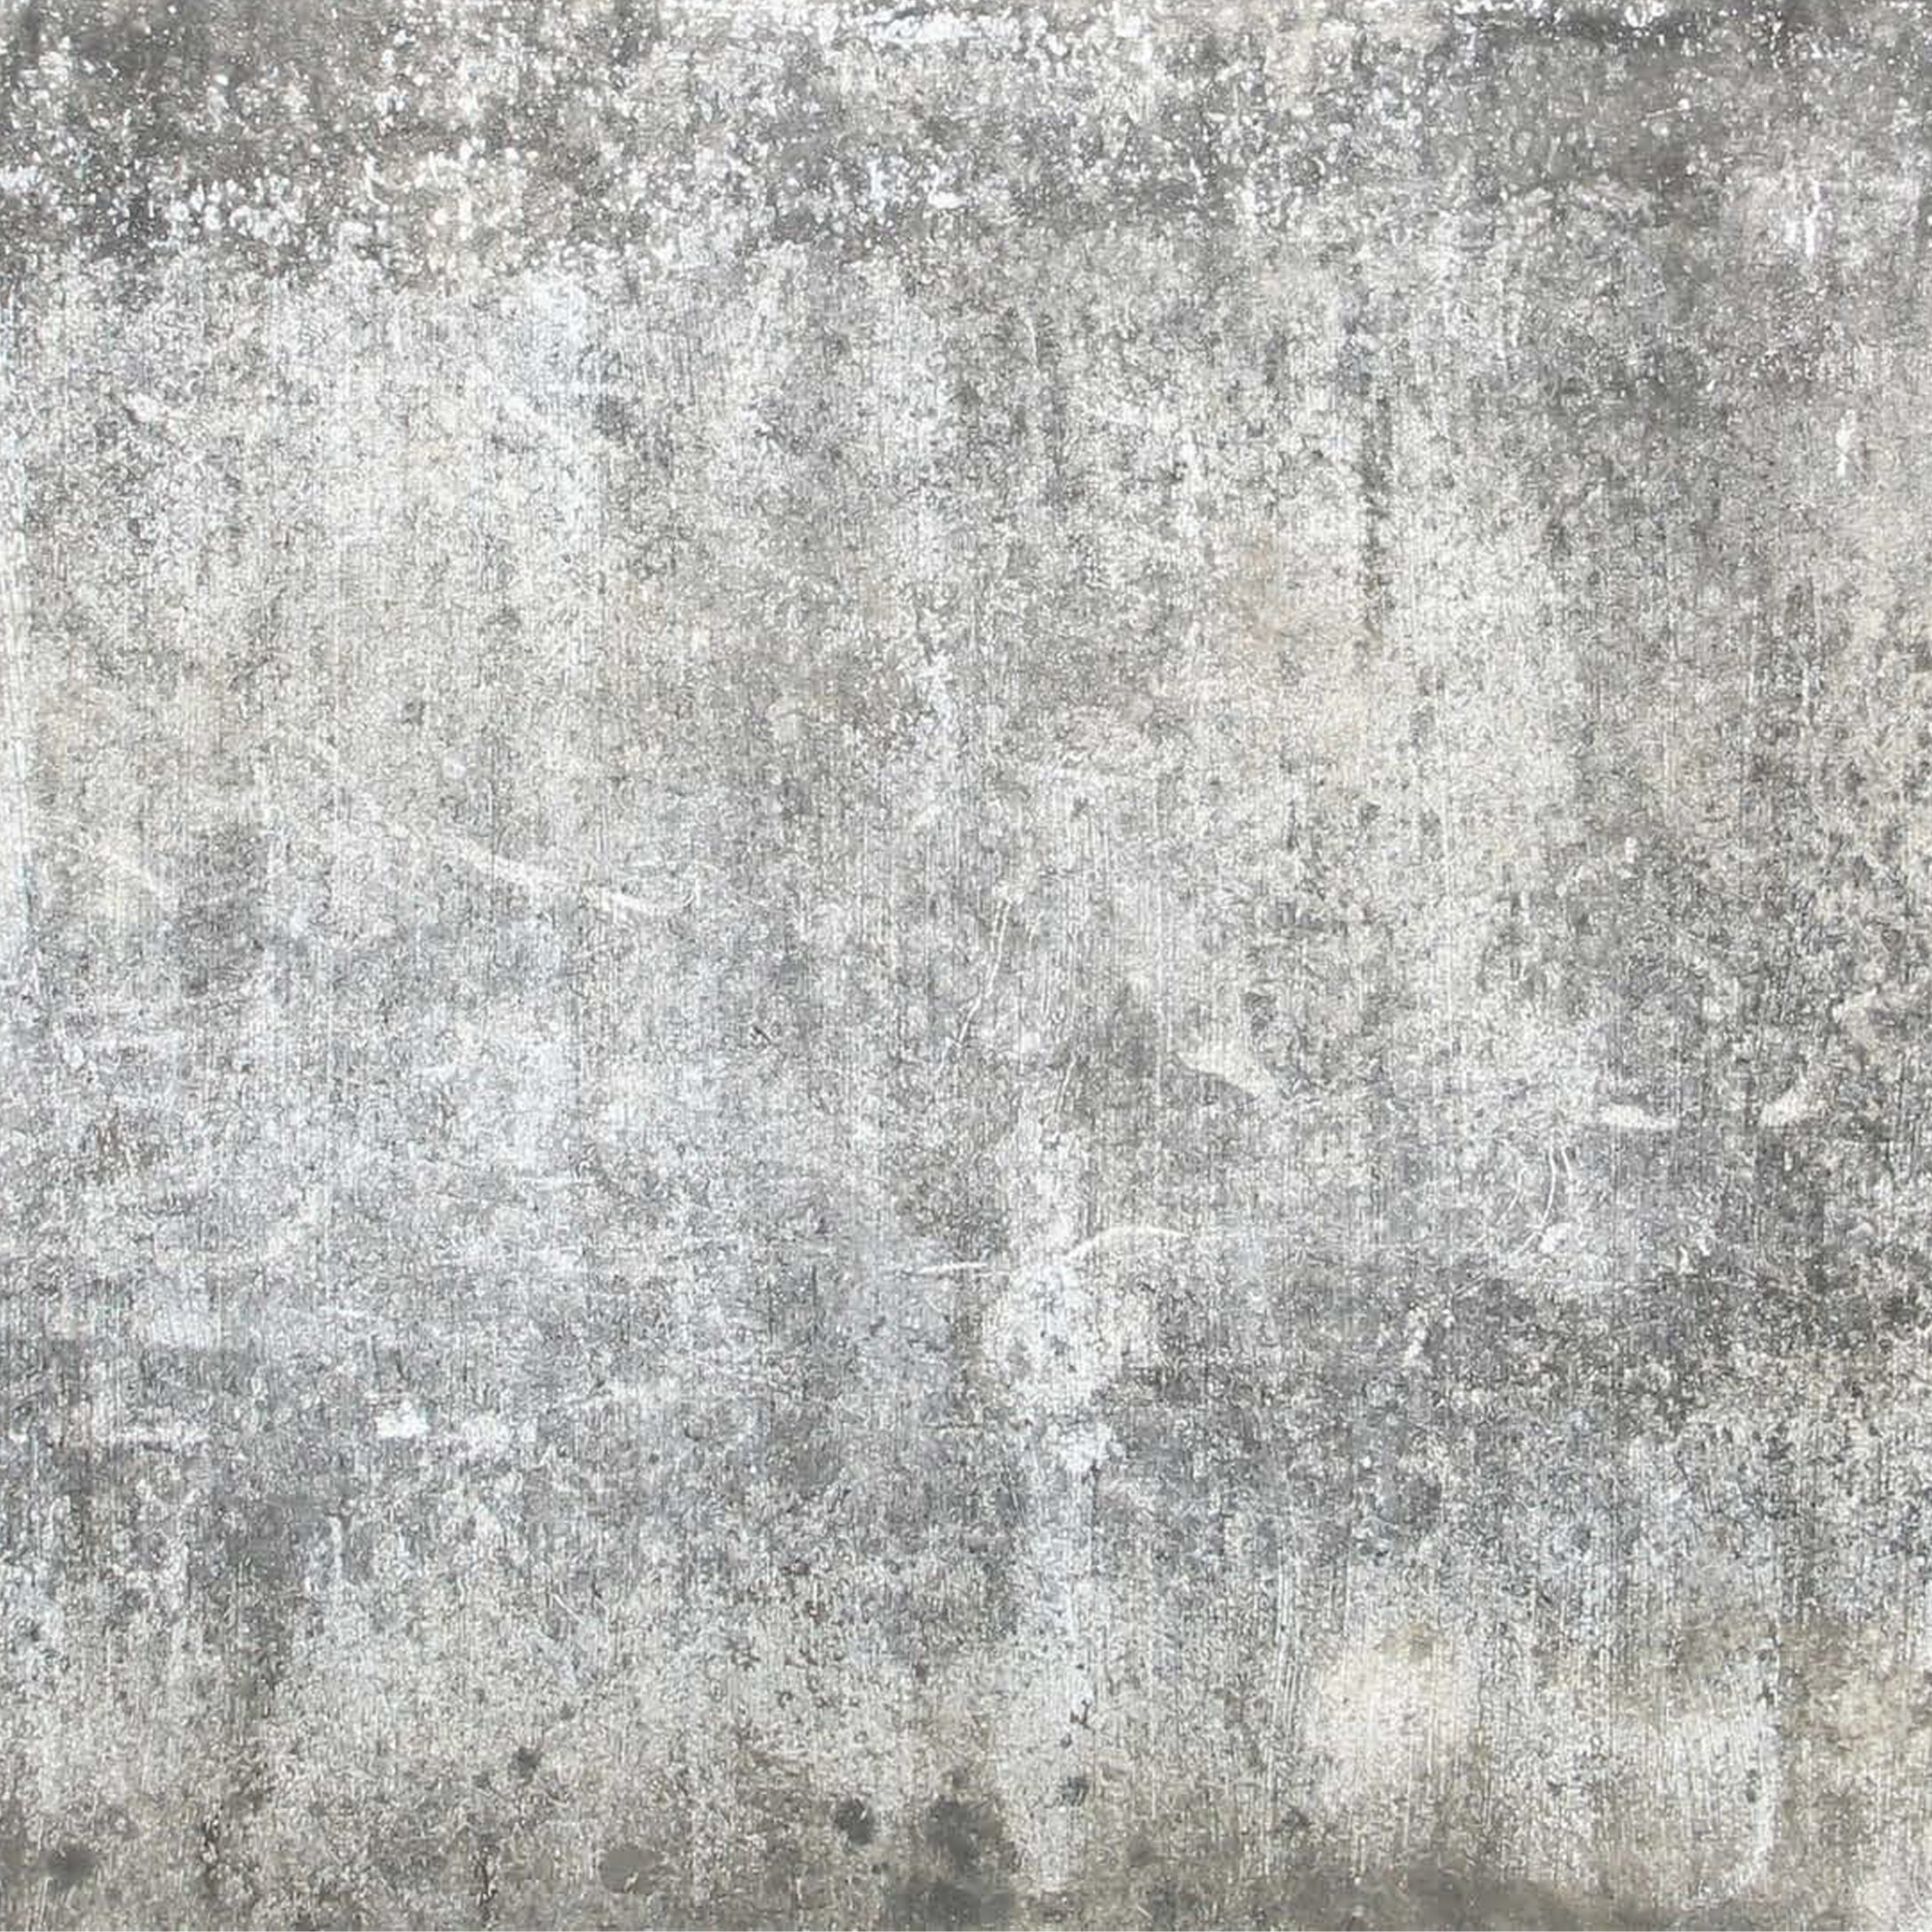 More concrete. Гранж бетон декоративная штукатурка. Пошарпаный бетон текстура. Бетонная стена. Серая бетонная стена.